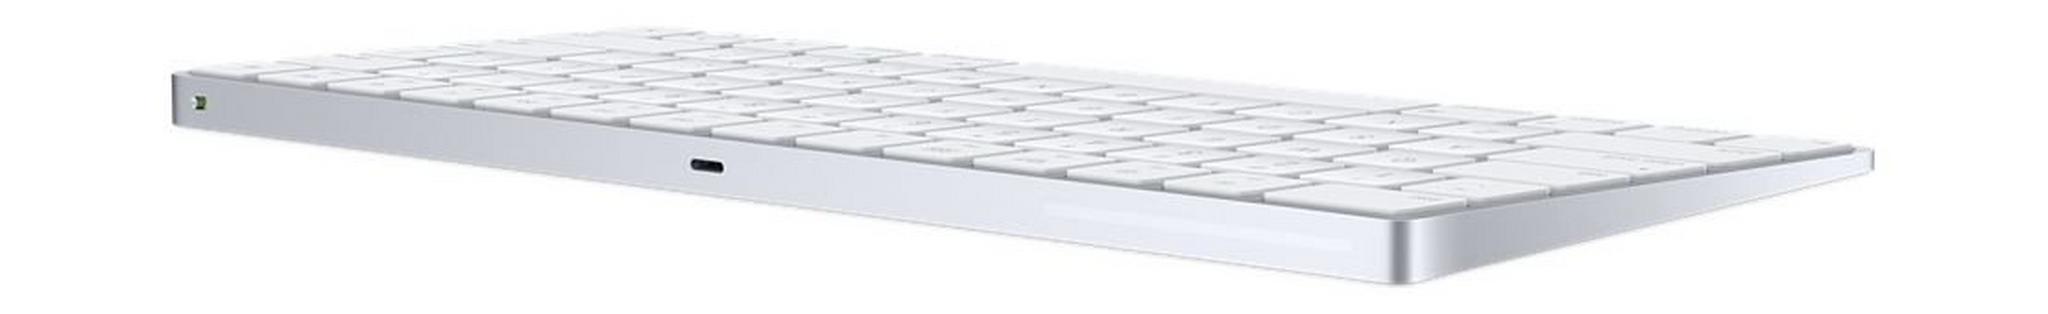 Apple Bluetooth Wireless Magic Keyboard (MLA22LL/A) - Silver